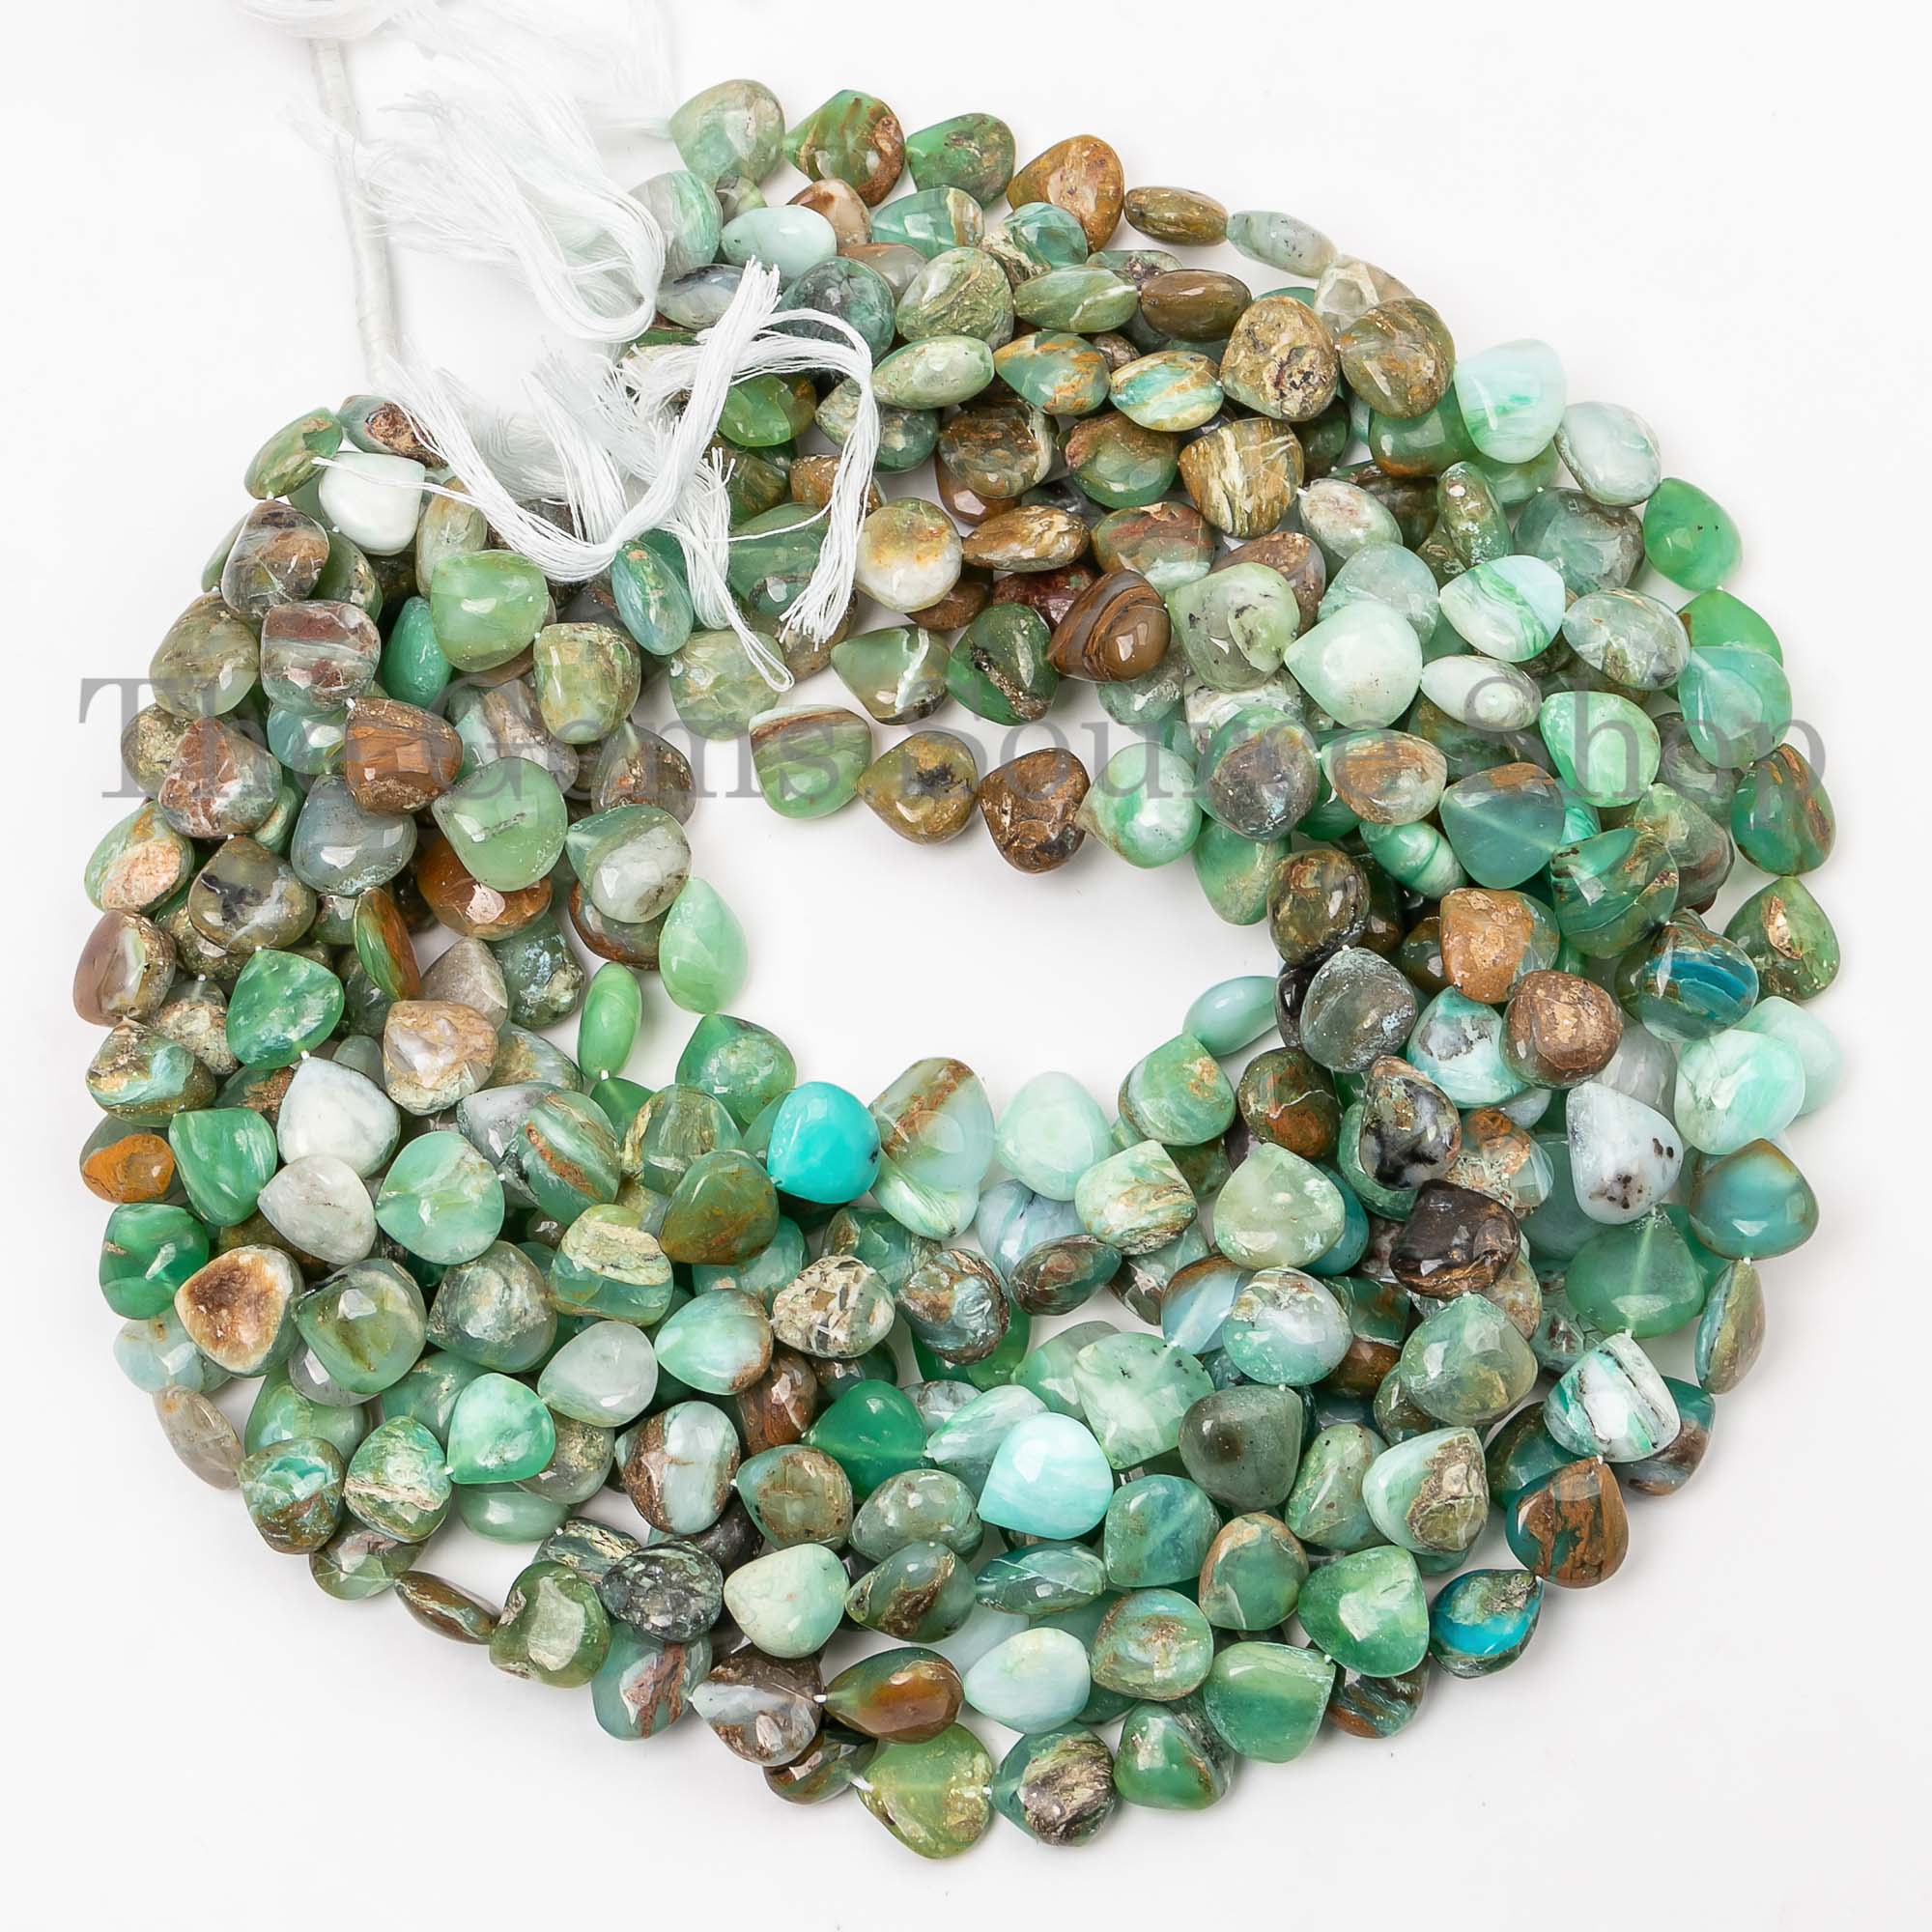 Peru Opal Beads, Peru Opal Smooth Beads, Peru Opal Heart Shape Beads, Straight Drill Heart Beads